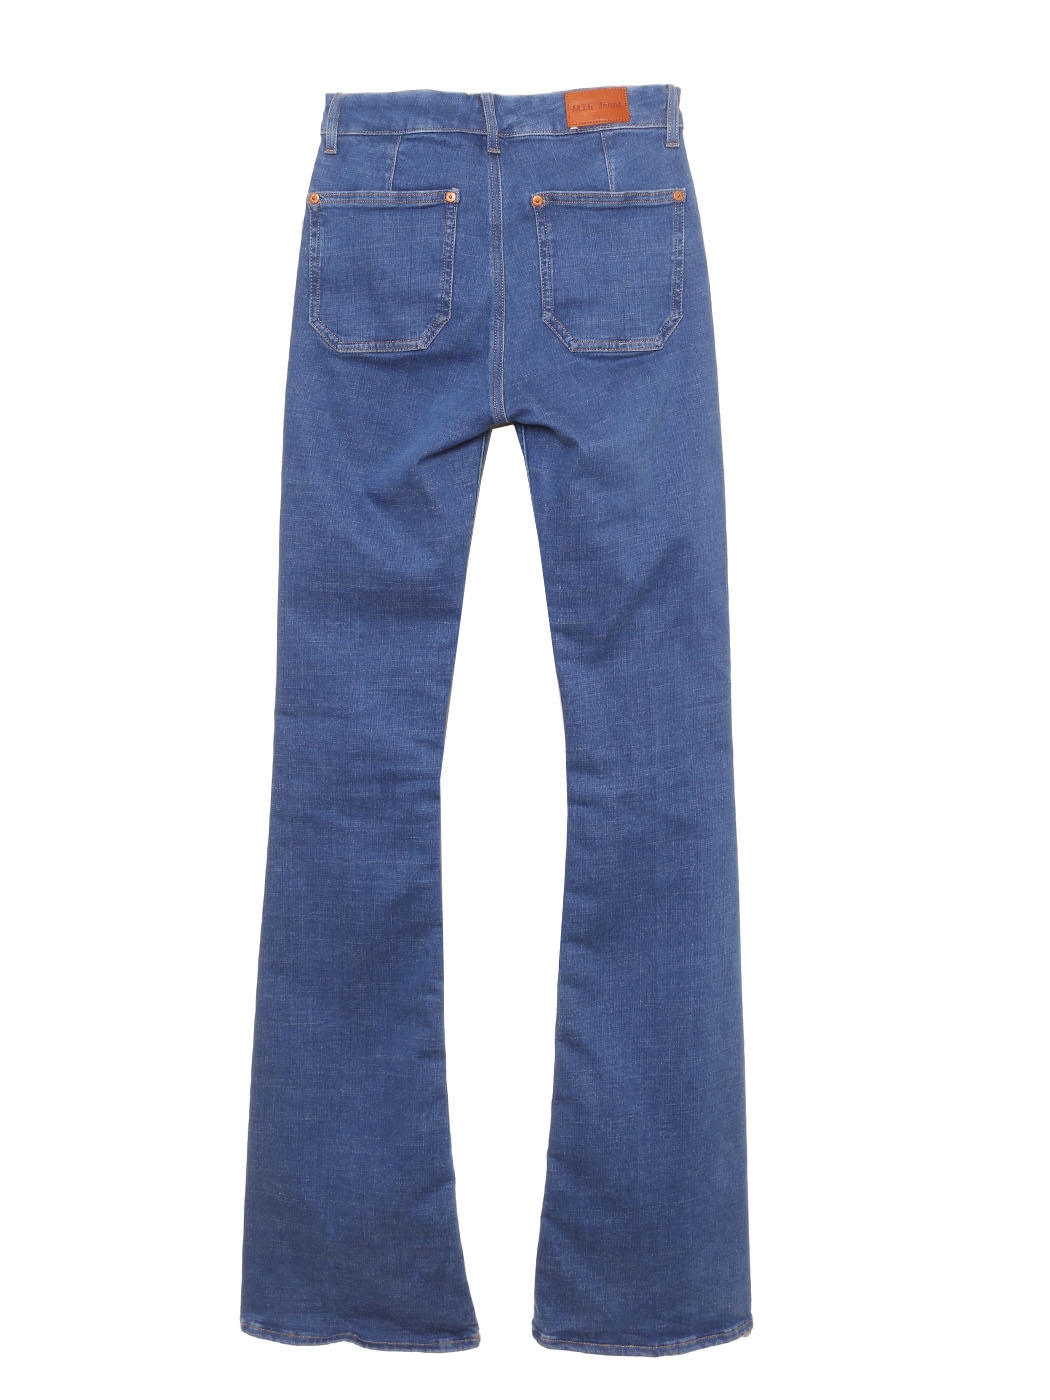 MIH Bright blue denim Bodycon Marrakesh high kick Flare Jeans Retail price €240 Size 25